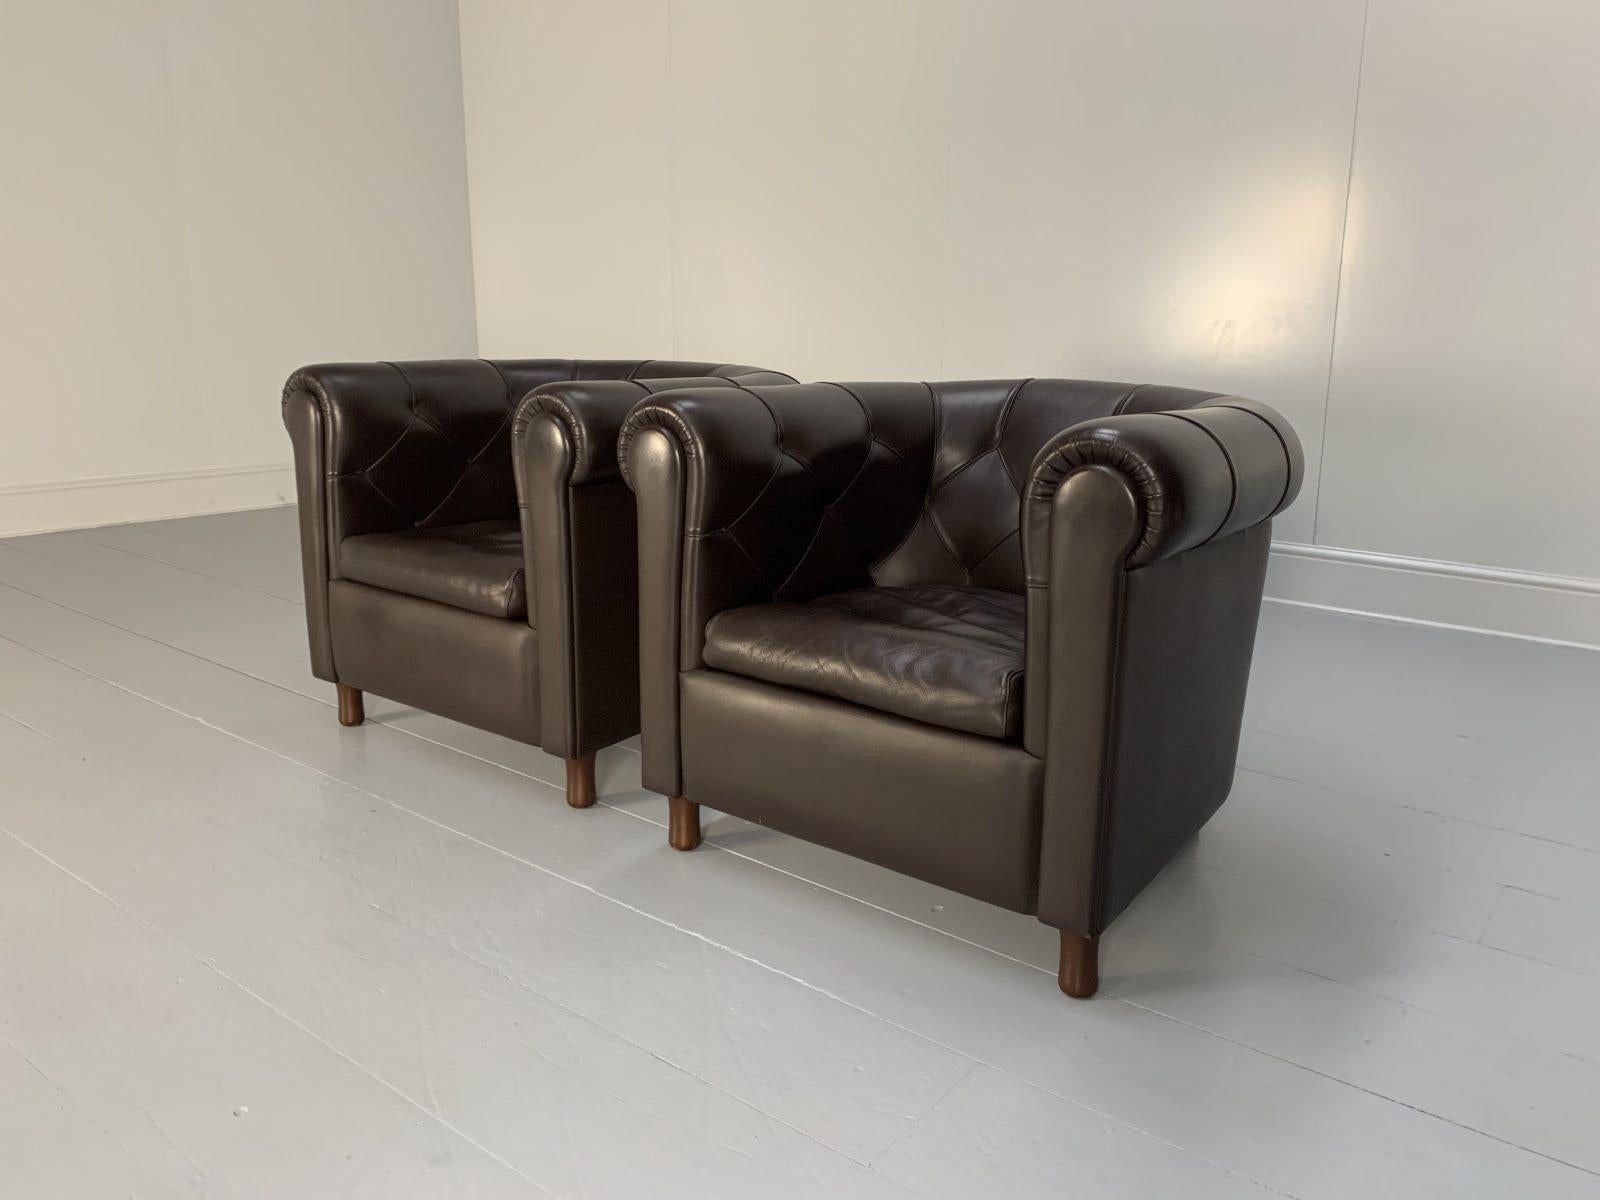 Contemporary 2 Poltrona Frau “Arcadia” Armchairs, in “Pelle Frau” Dark Brown Leather For Sale